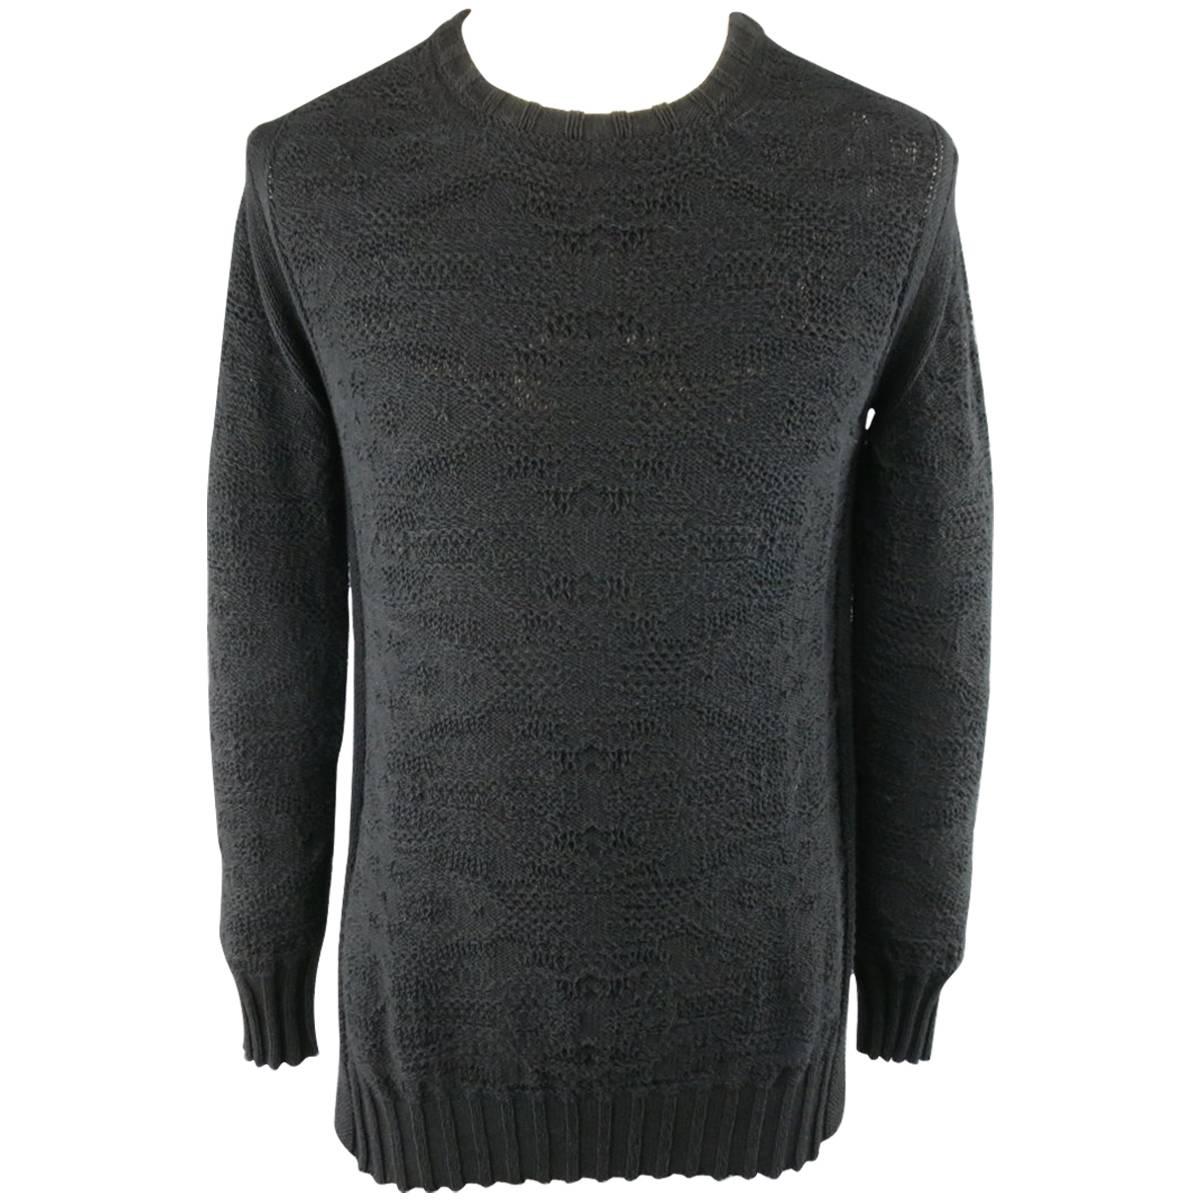 SILENT by DAMIR DOMA Size S Black Textured Cotton Knit Crewneck Slit Pullover